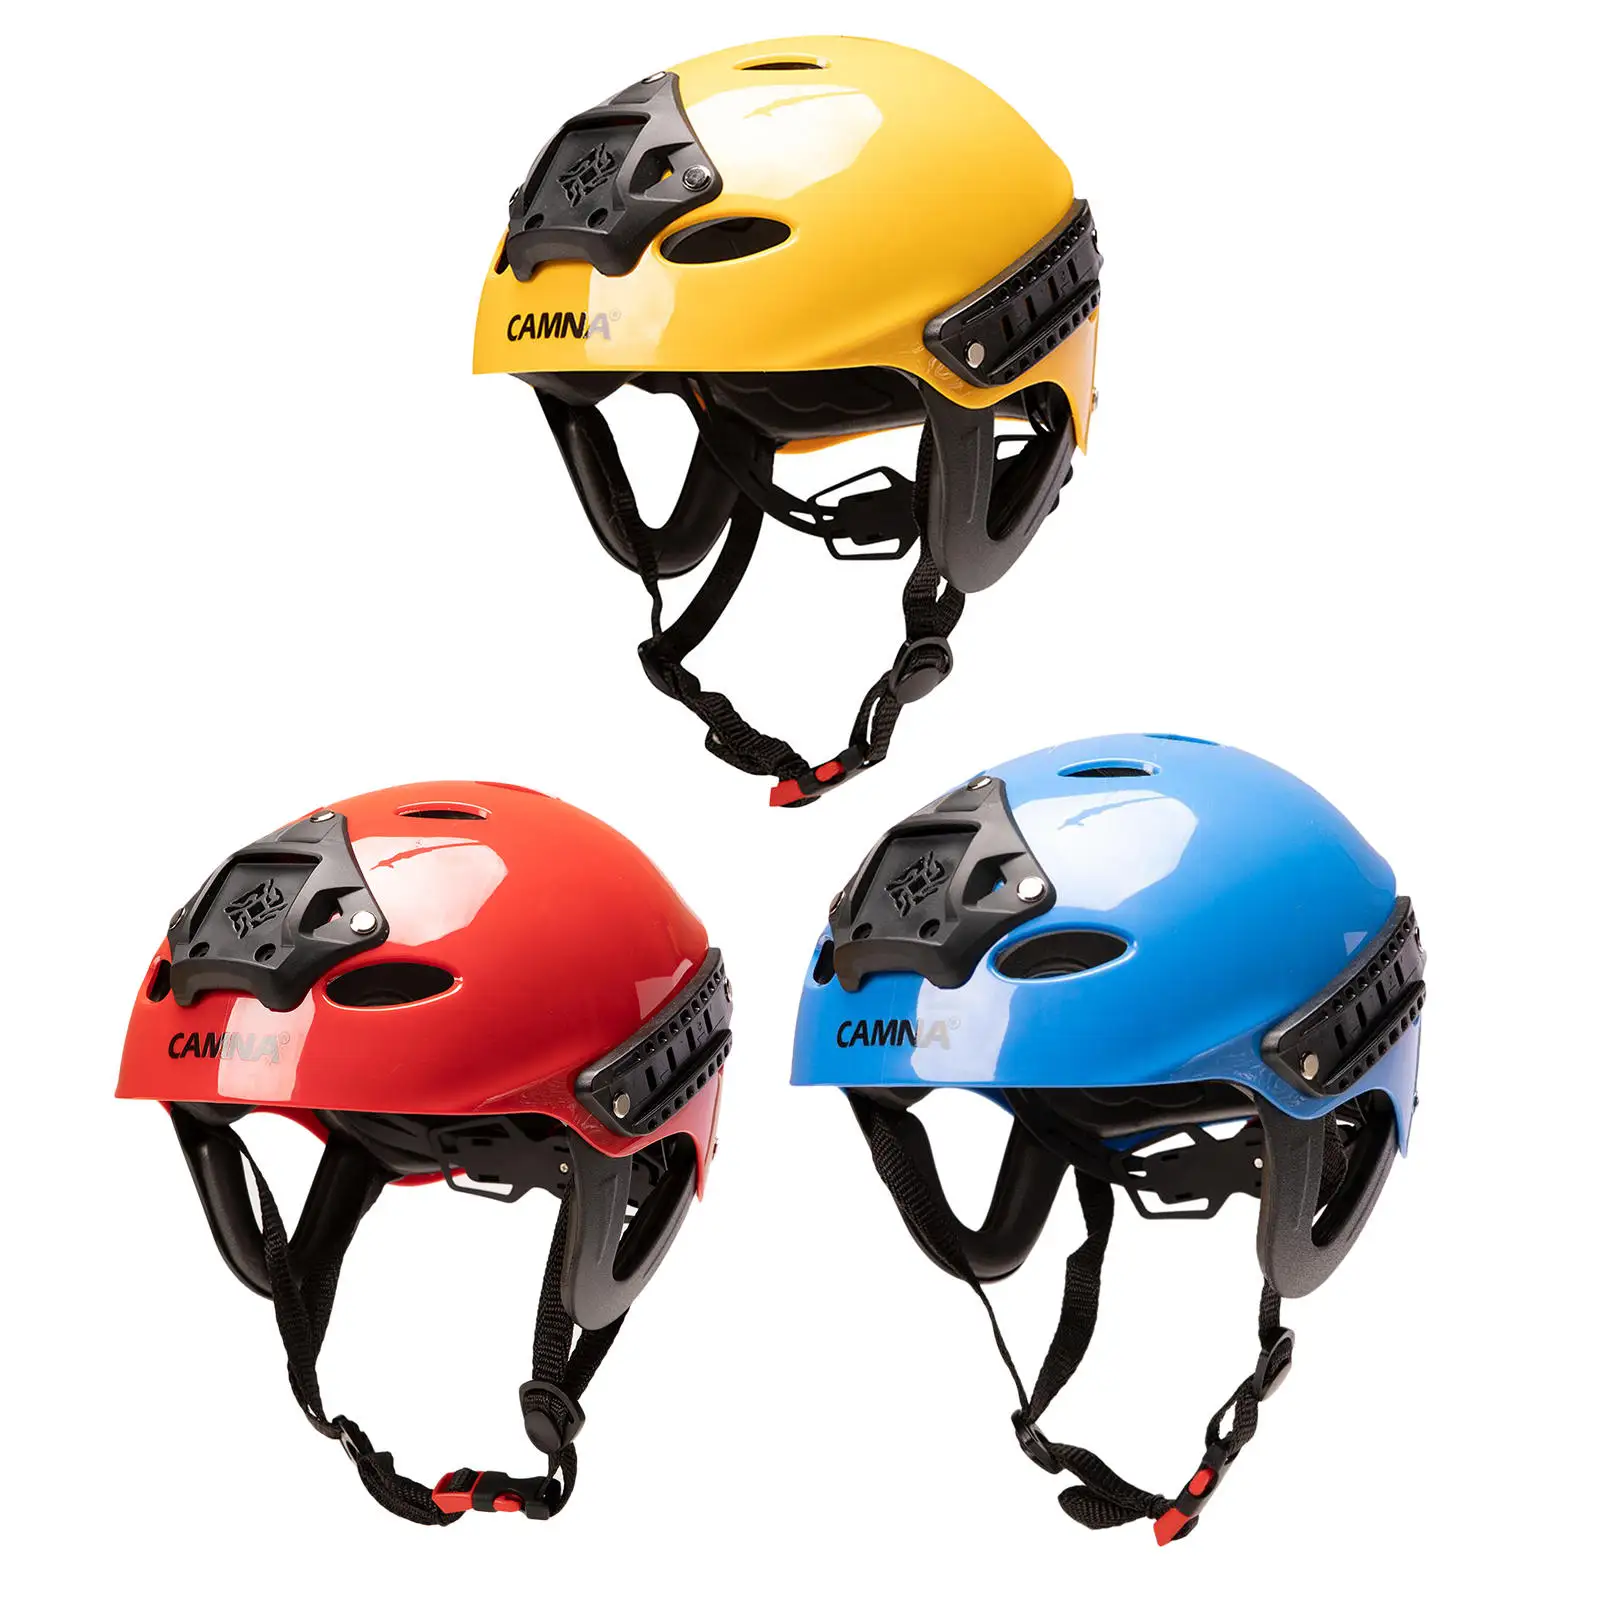 Outdoor Safety Helmet Rock Climbing Caving Rescue Drifts Riding Sports Equipment 